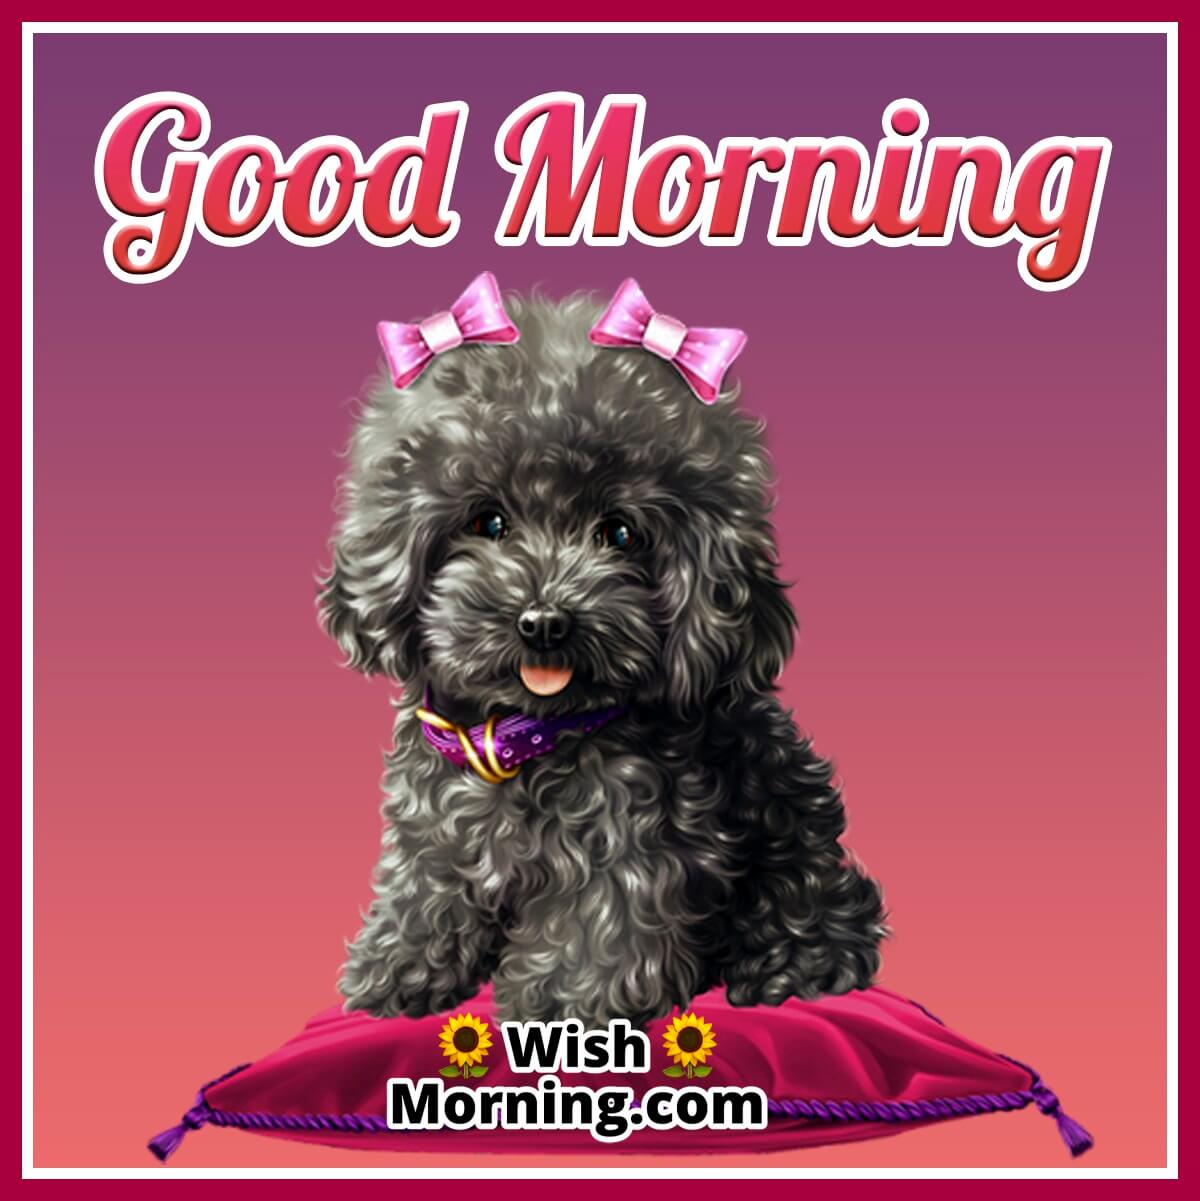 Good Morning – Cute Dog Image